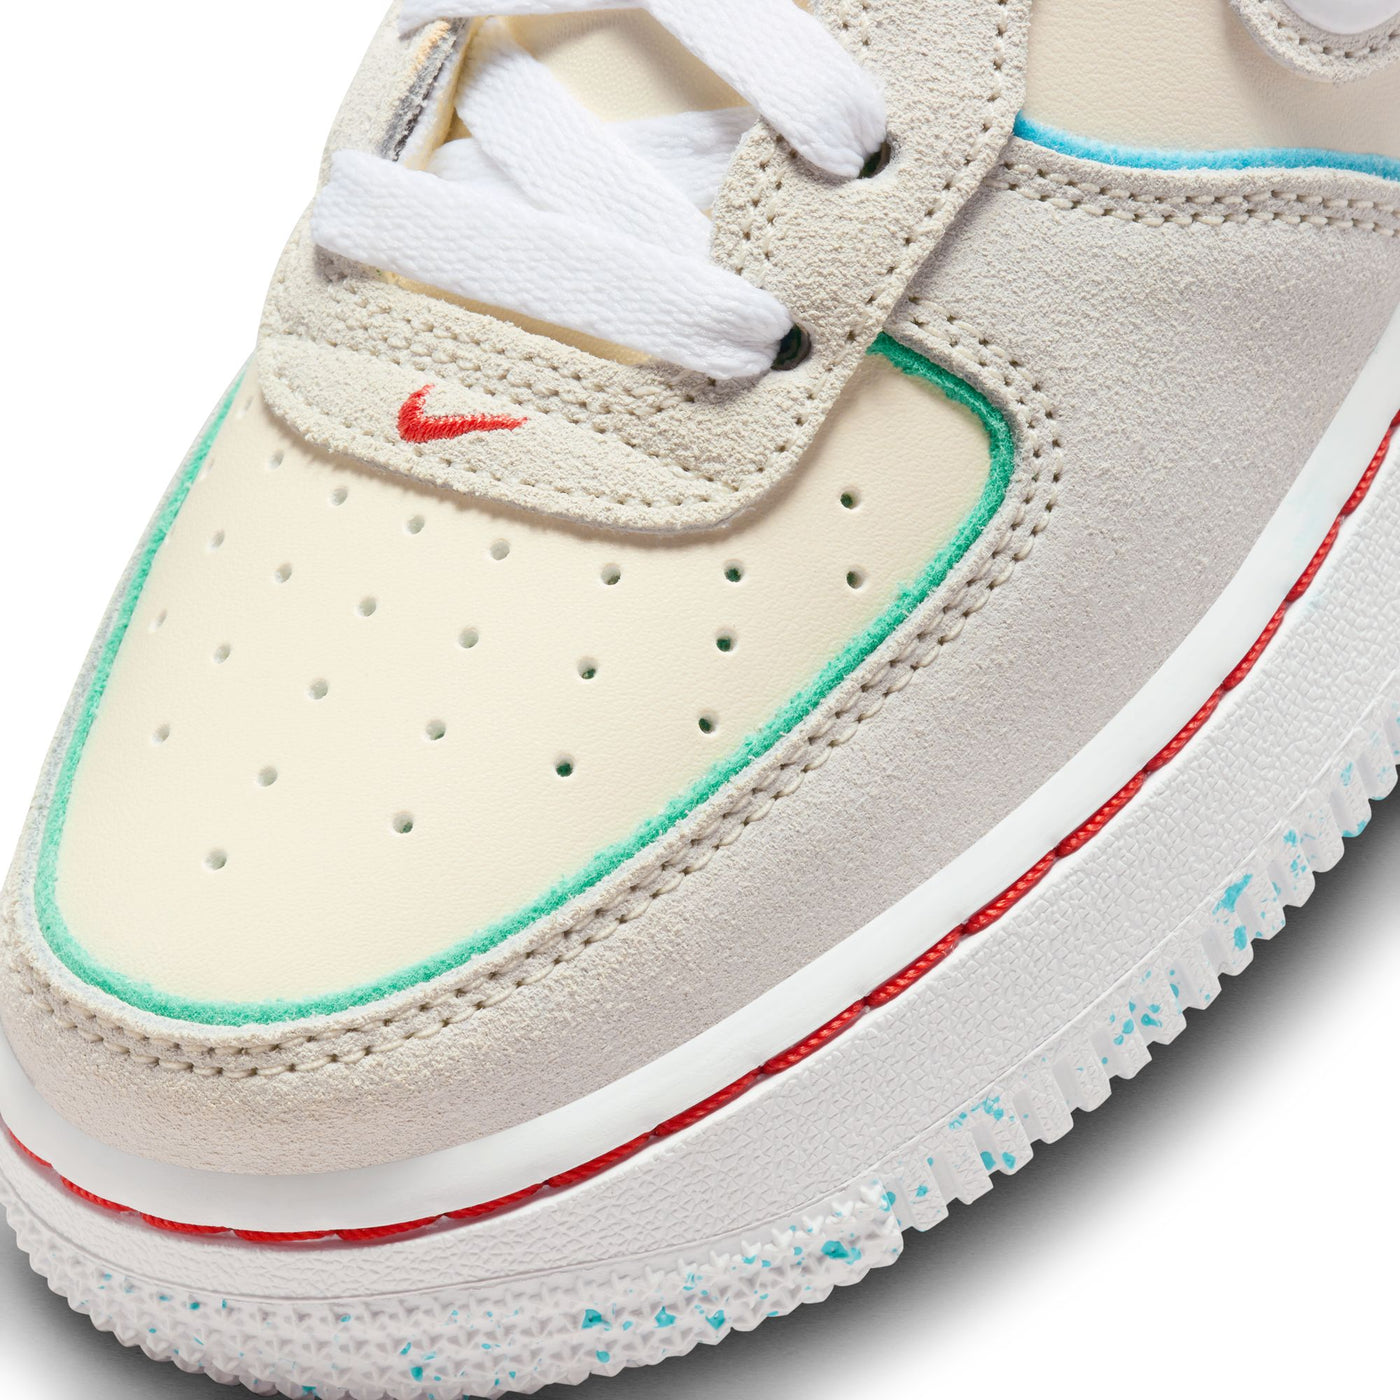 Nike Air Force 1 LV8 Big Kids Boys Grade School Shoe Size: 7y